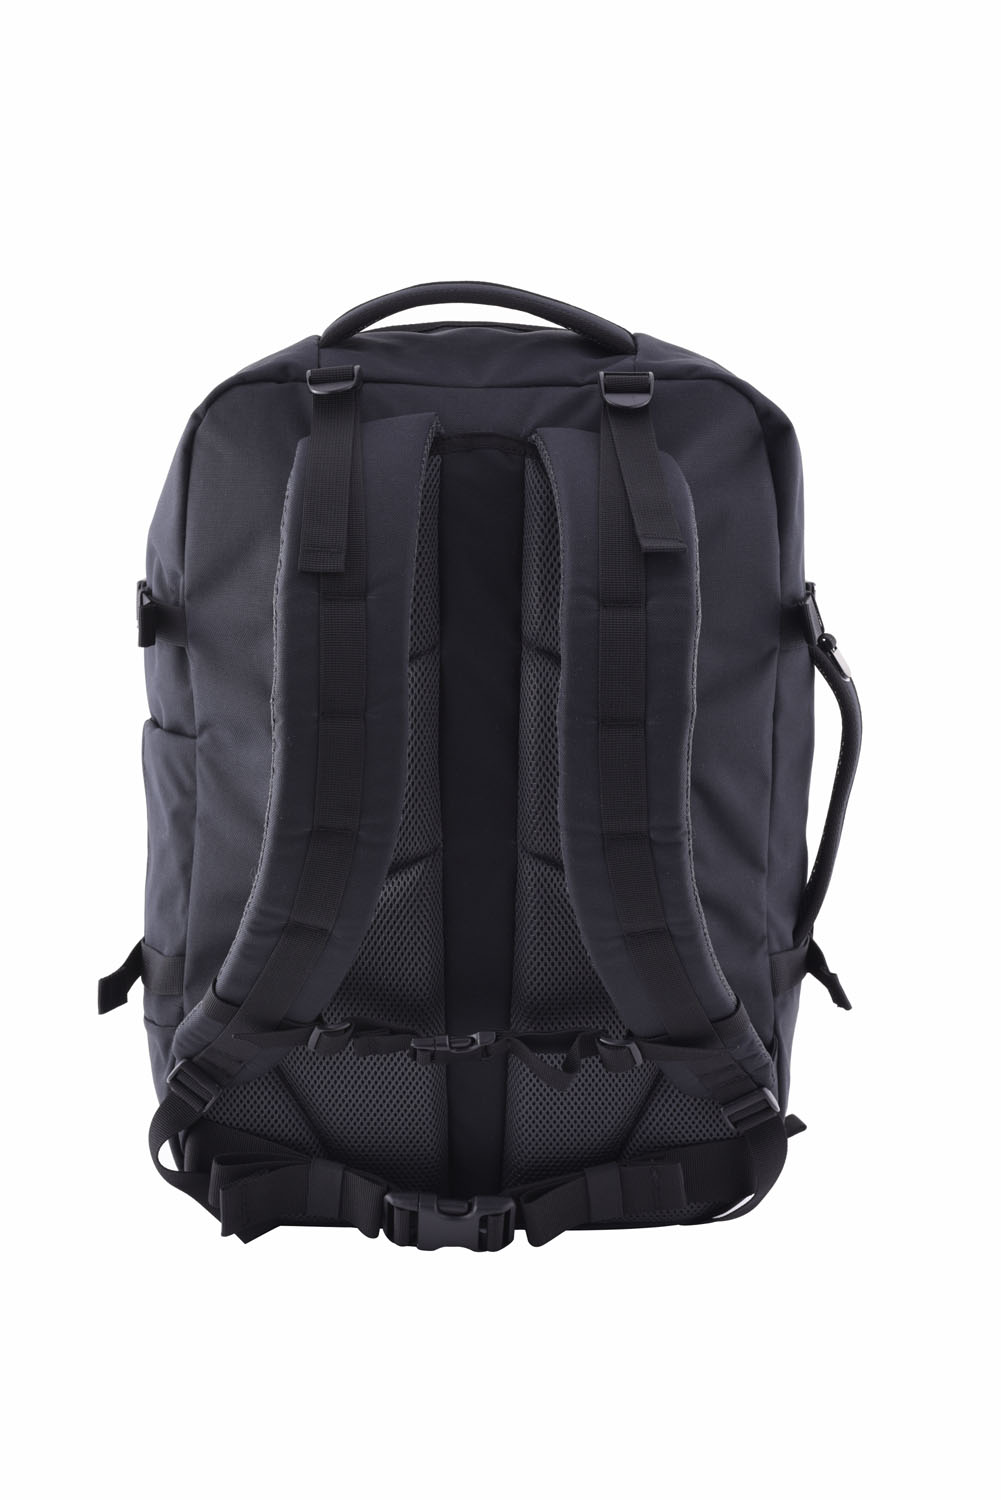 Cabin Zero Military Backpack 44L Absolute Black | jetzt günstig online